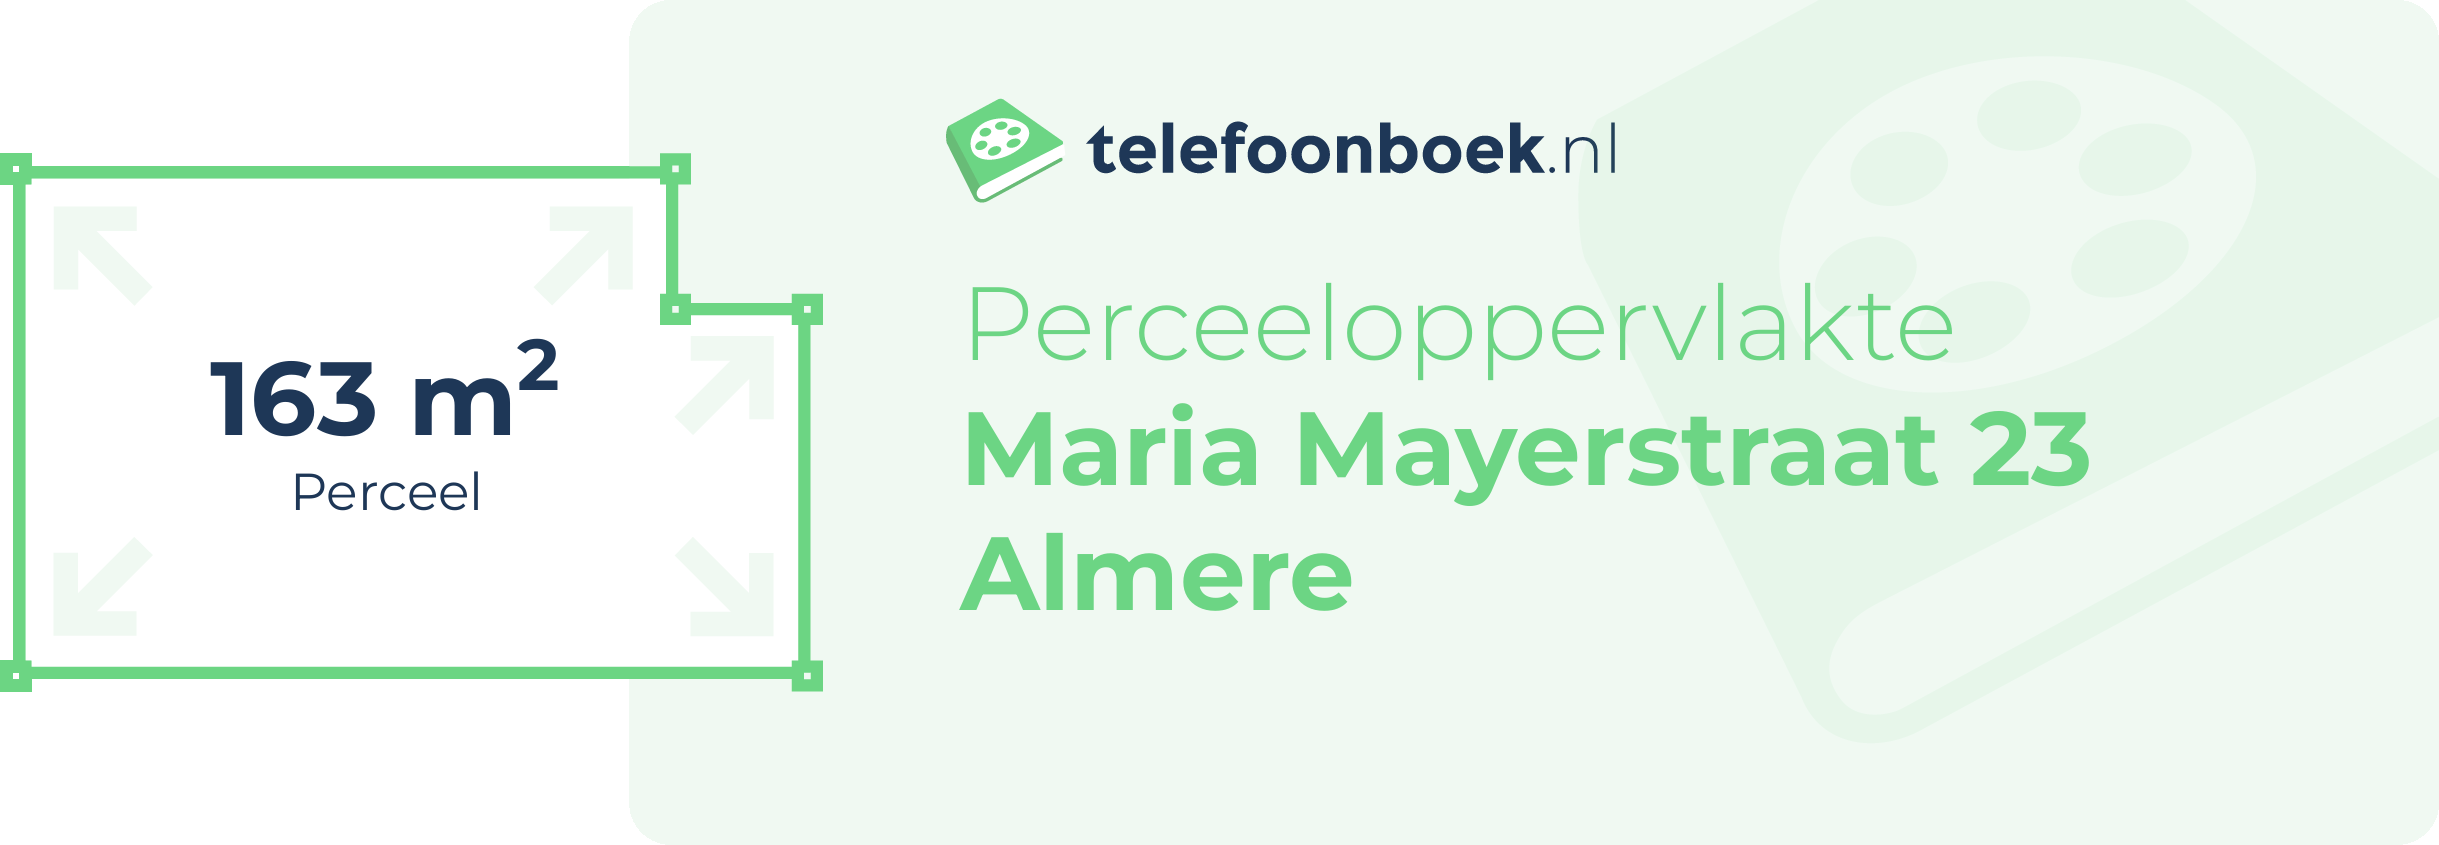 Perceeloppervlakte Maria Mayerstraat 23 Almere